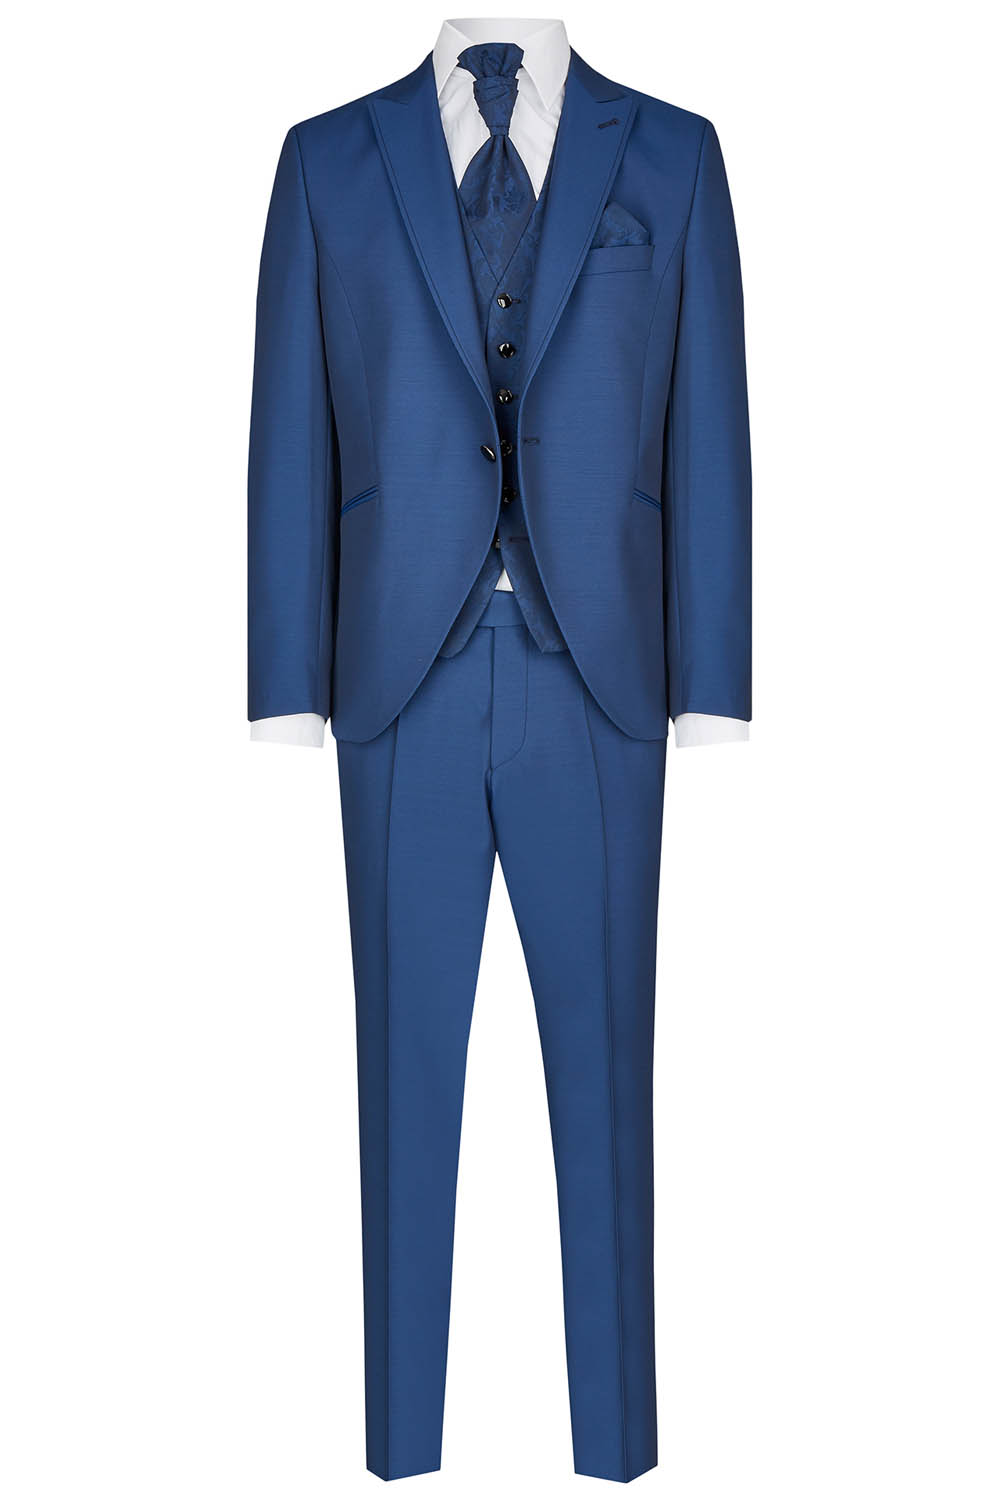 Petrol Blue Drop 8 3 Piece Suit - Tom Murphy's Formal and Menswear